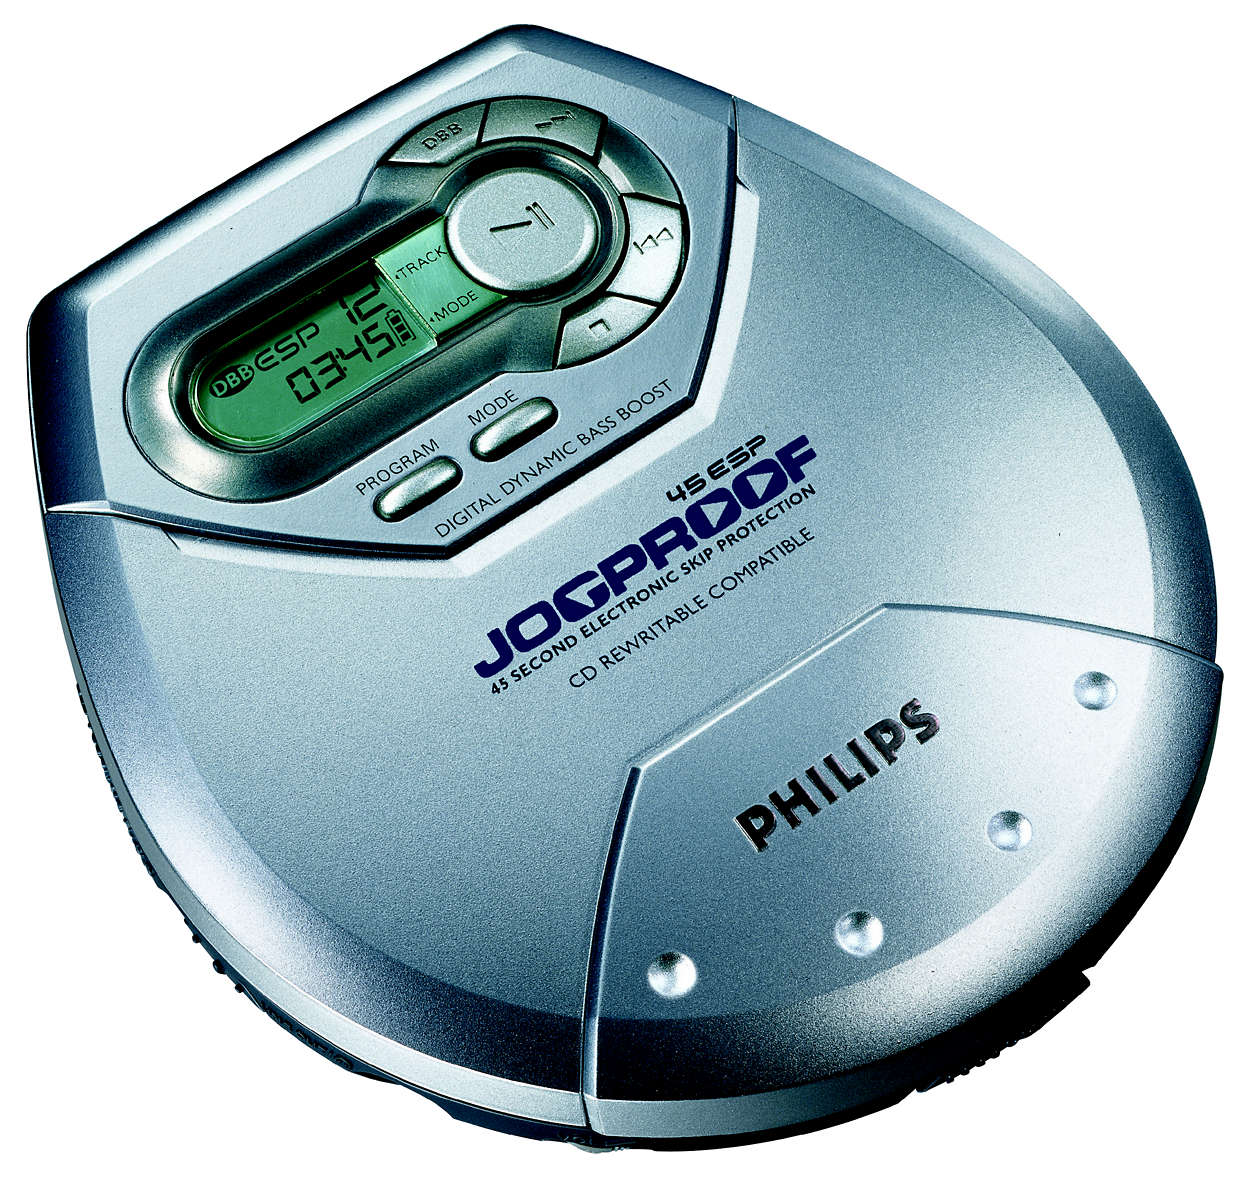 Cd mp3 player. CD mp3 плеер Philips ax5301. CD Philips ax1100. CD mp3 плеер Philips 2004. CD mp3 плеер Philips 2005.